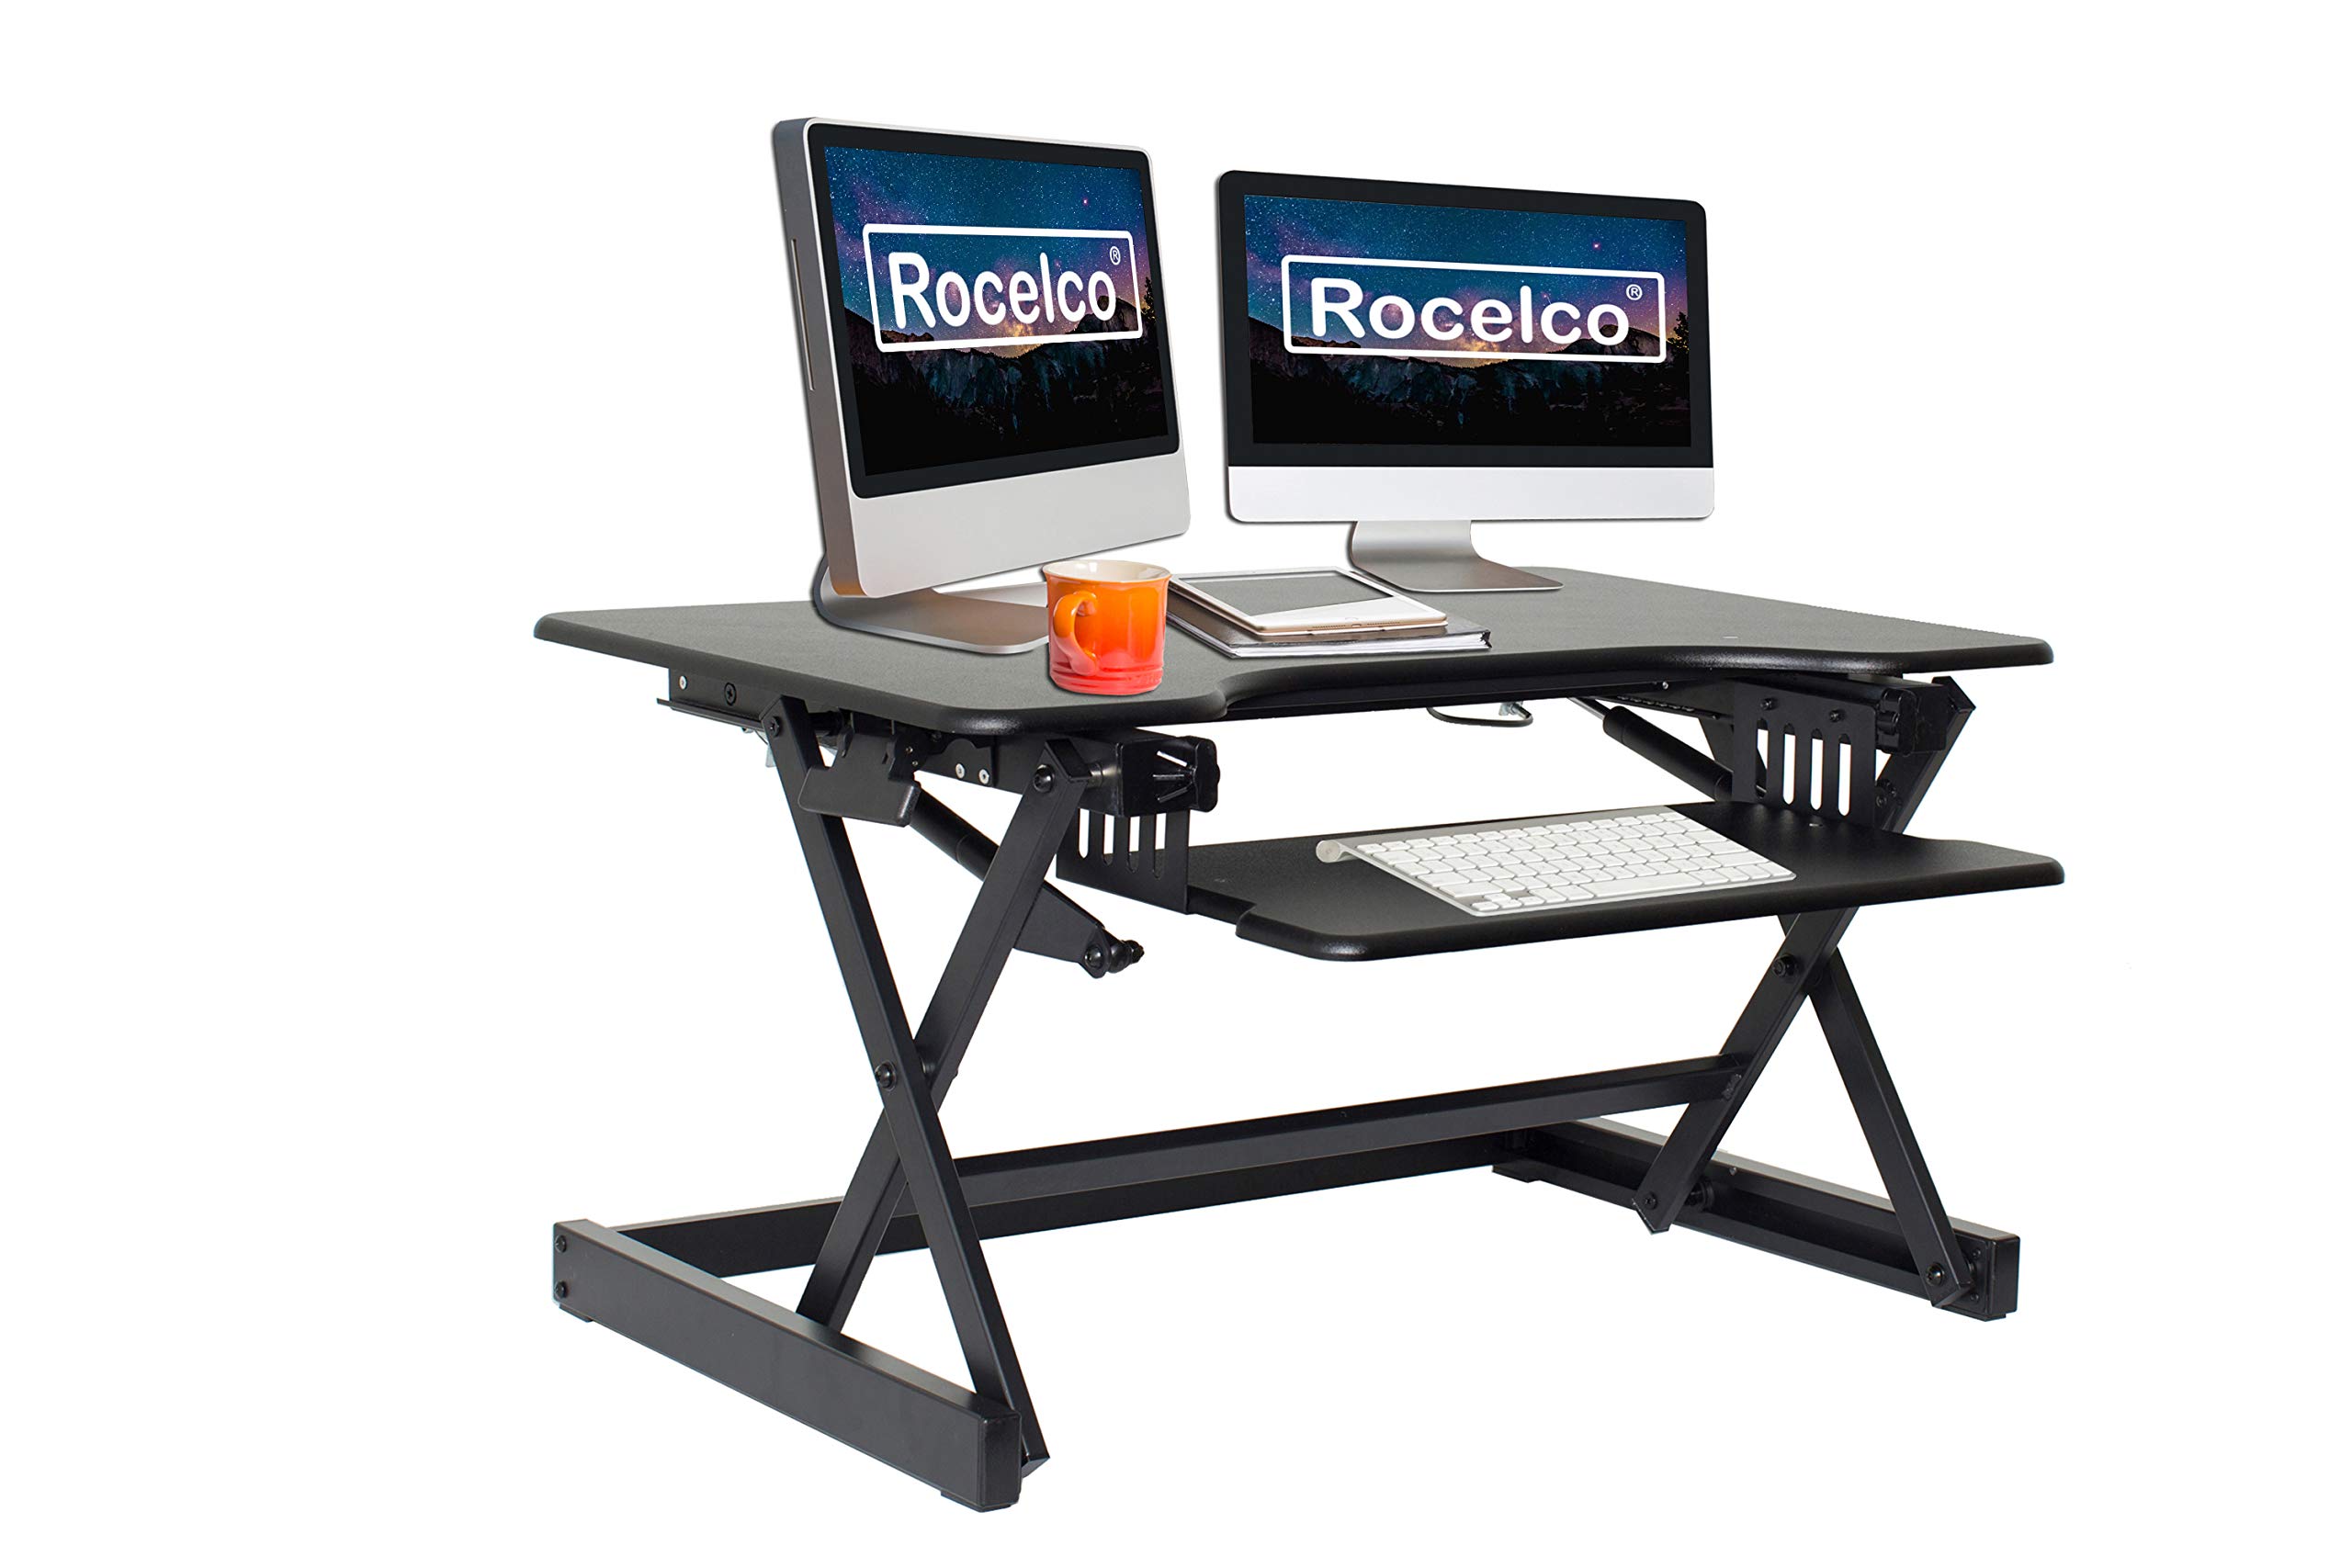 Rocelco ऊंचाई समायोज्य स्टैंडिंग डेस्क कनवर्टर